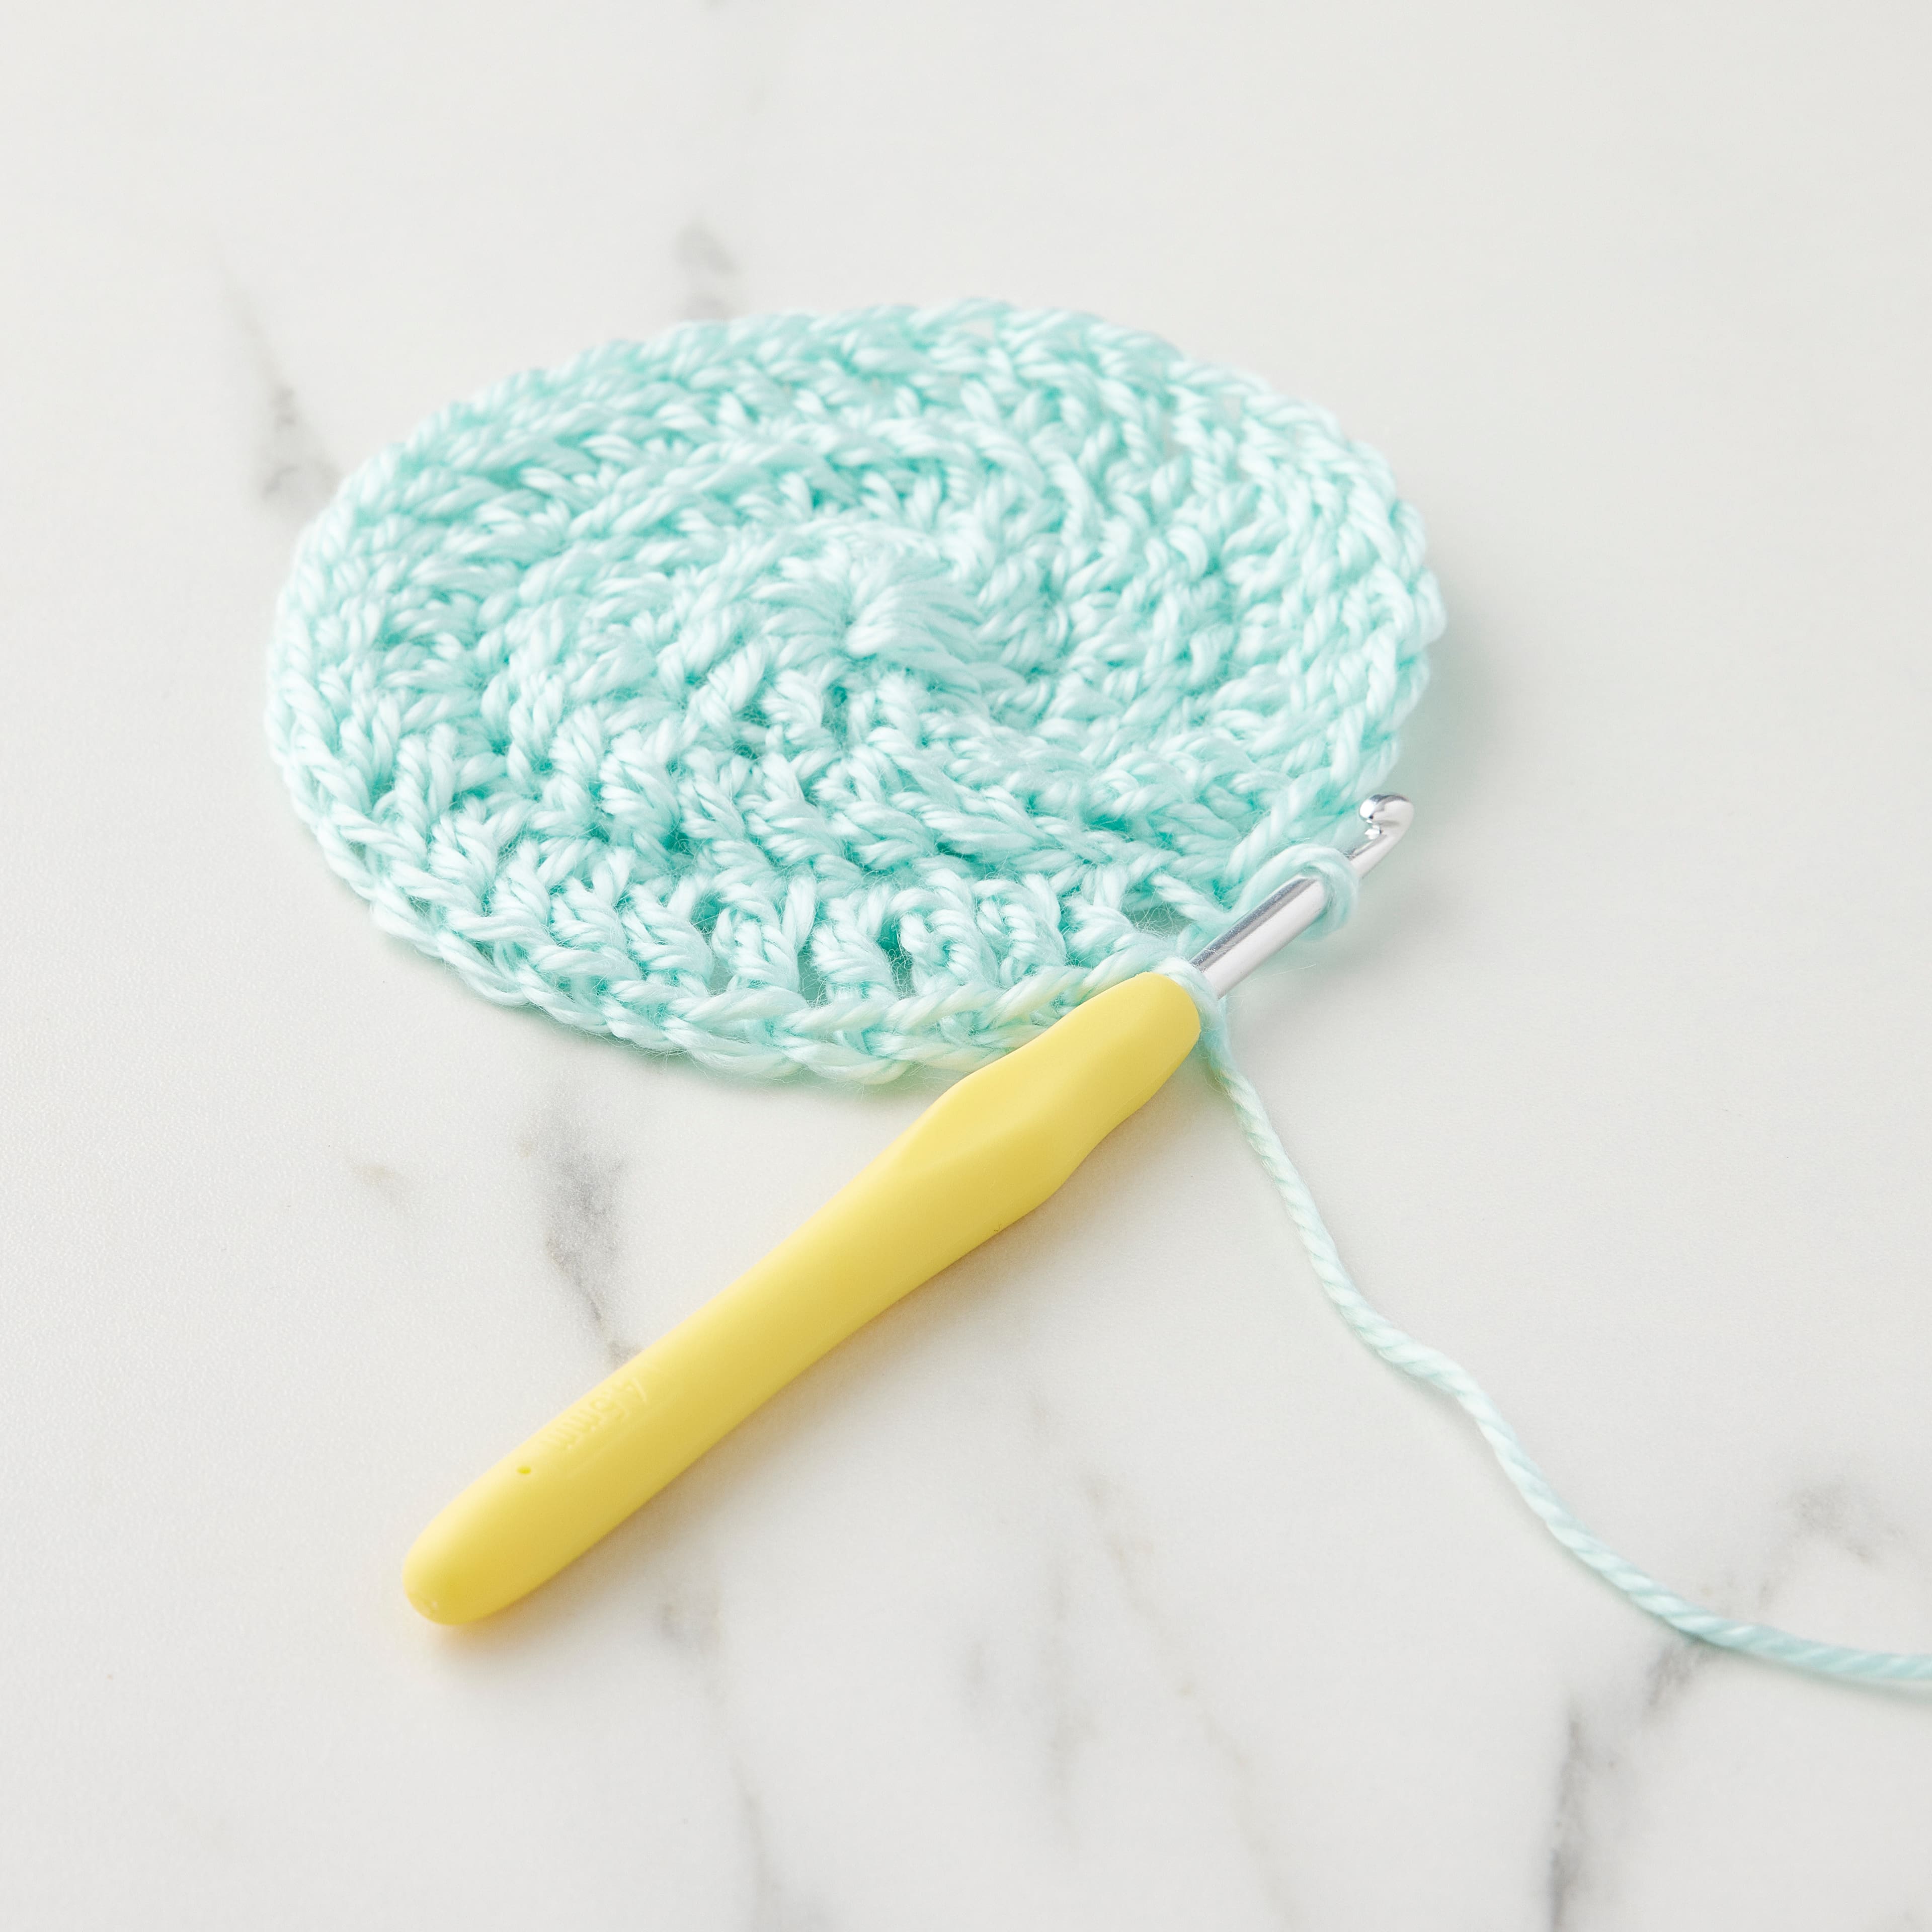 Ergonomic Aluminum Crochet Hook by Loops & Threads | G / 4.5 mm | Michaels